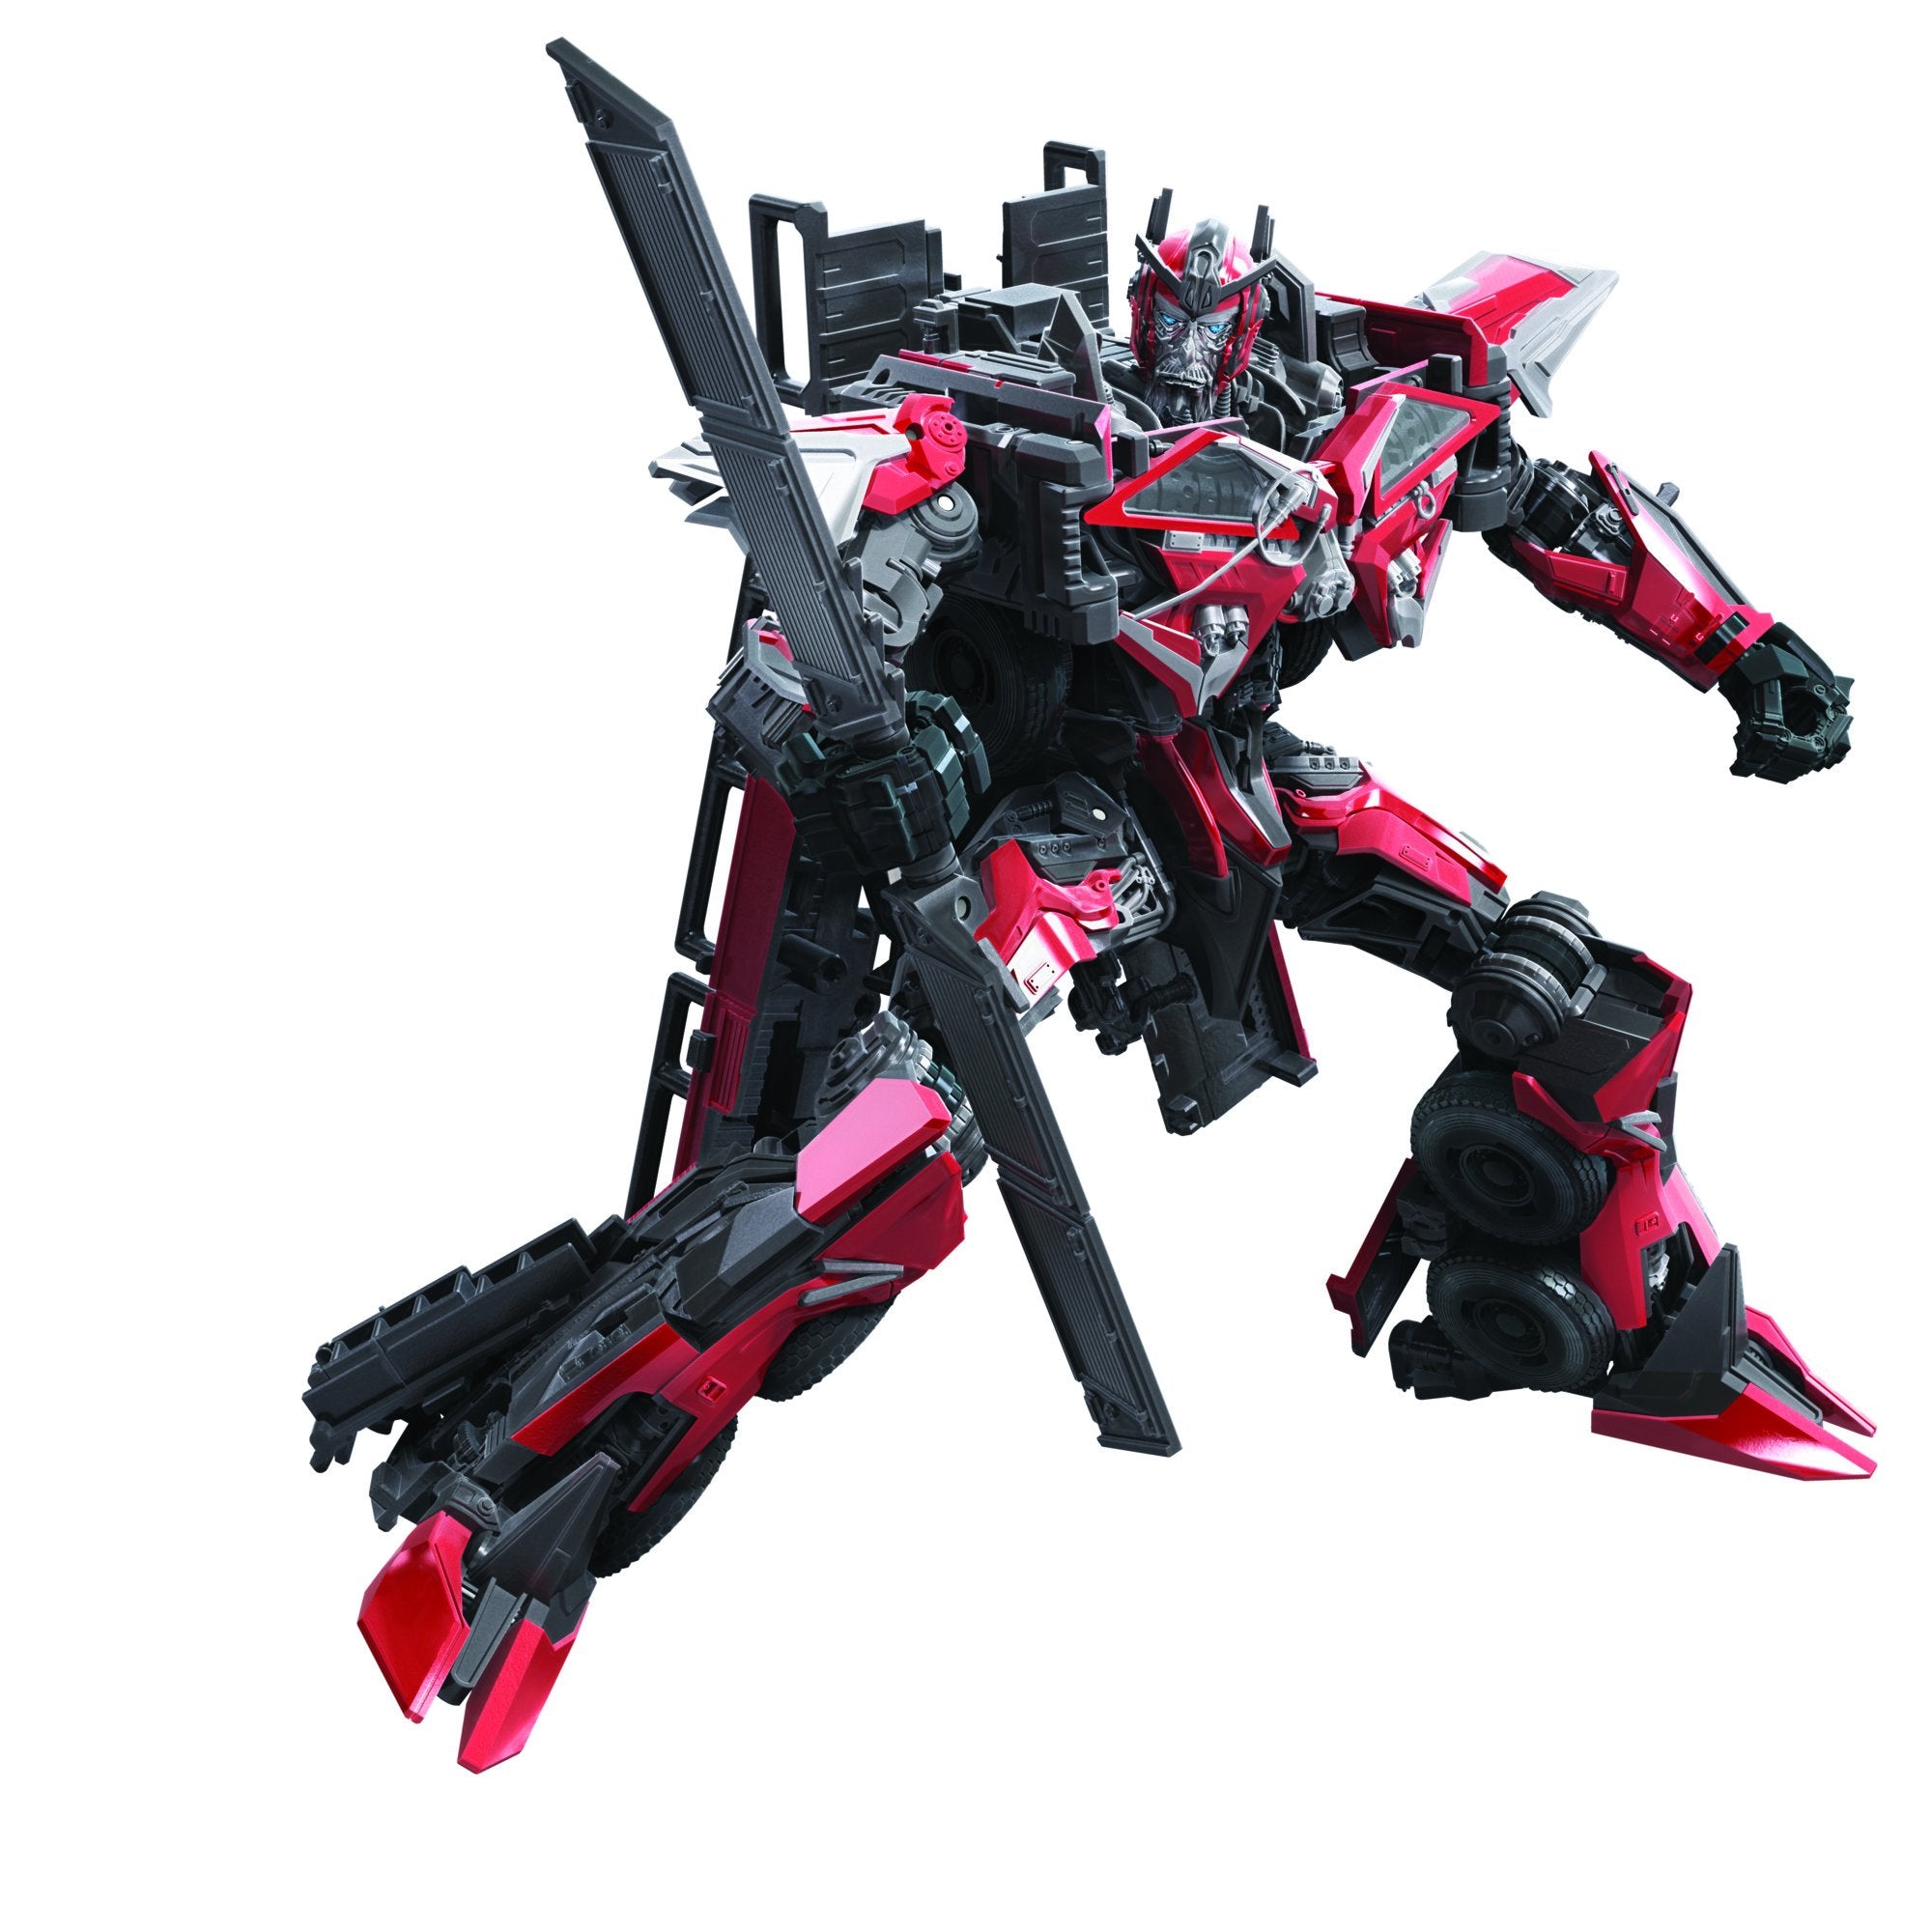 Transformers Studio: Sentinel Prime Figure